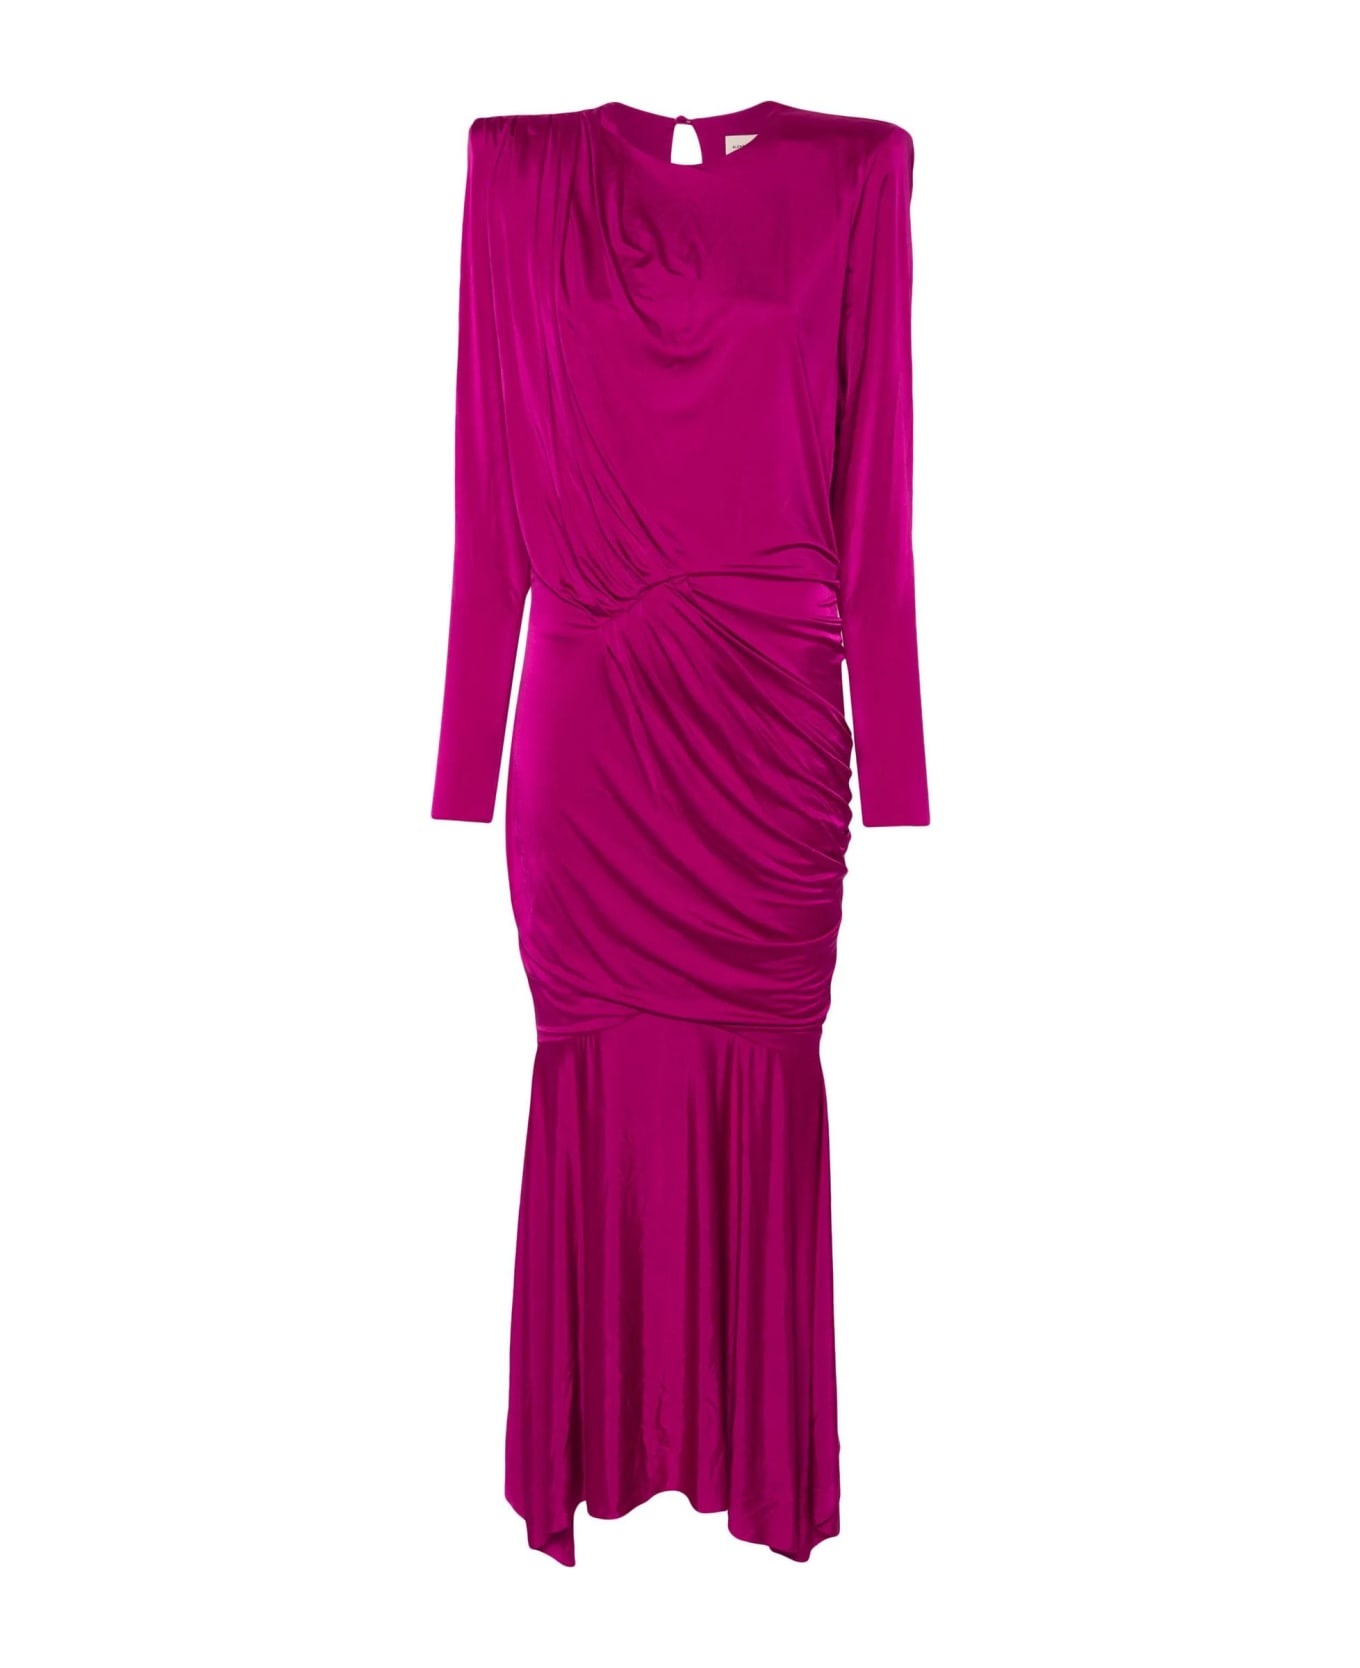 Alexandre Vauthier Fuchsia Pink Stretch-design Dress - Fuchsia